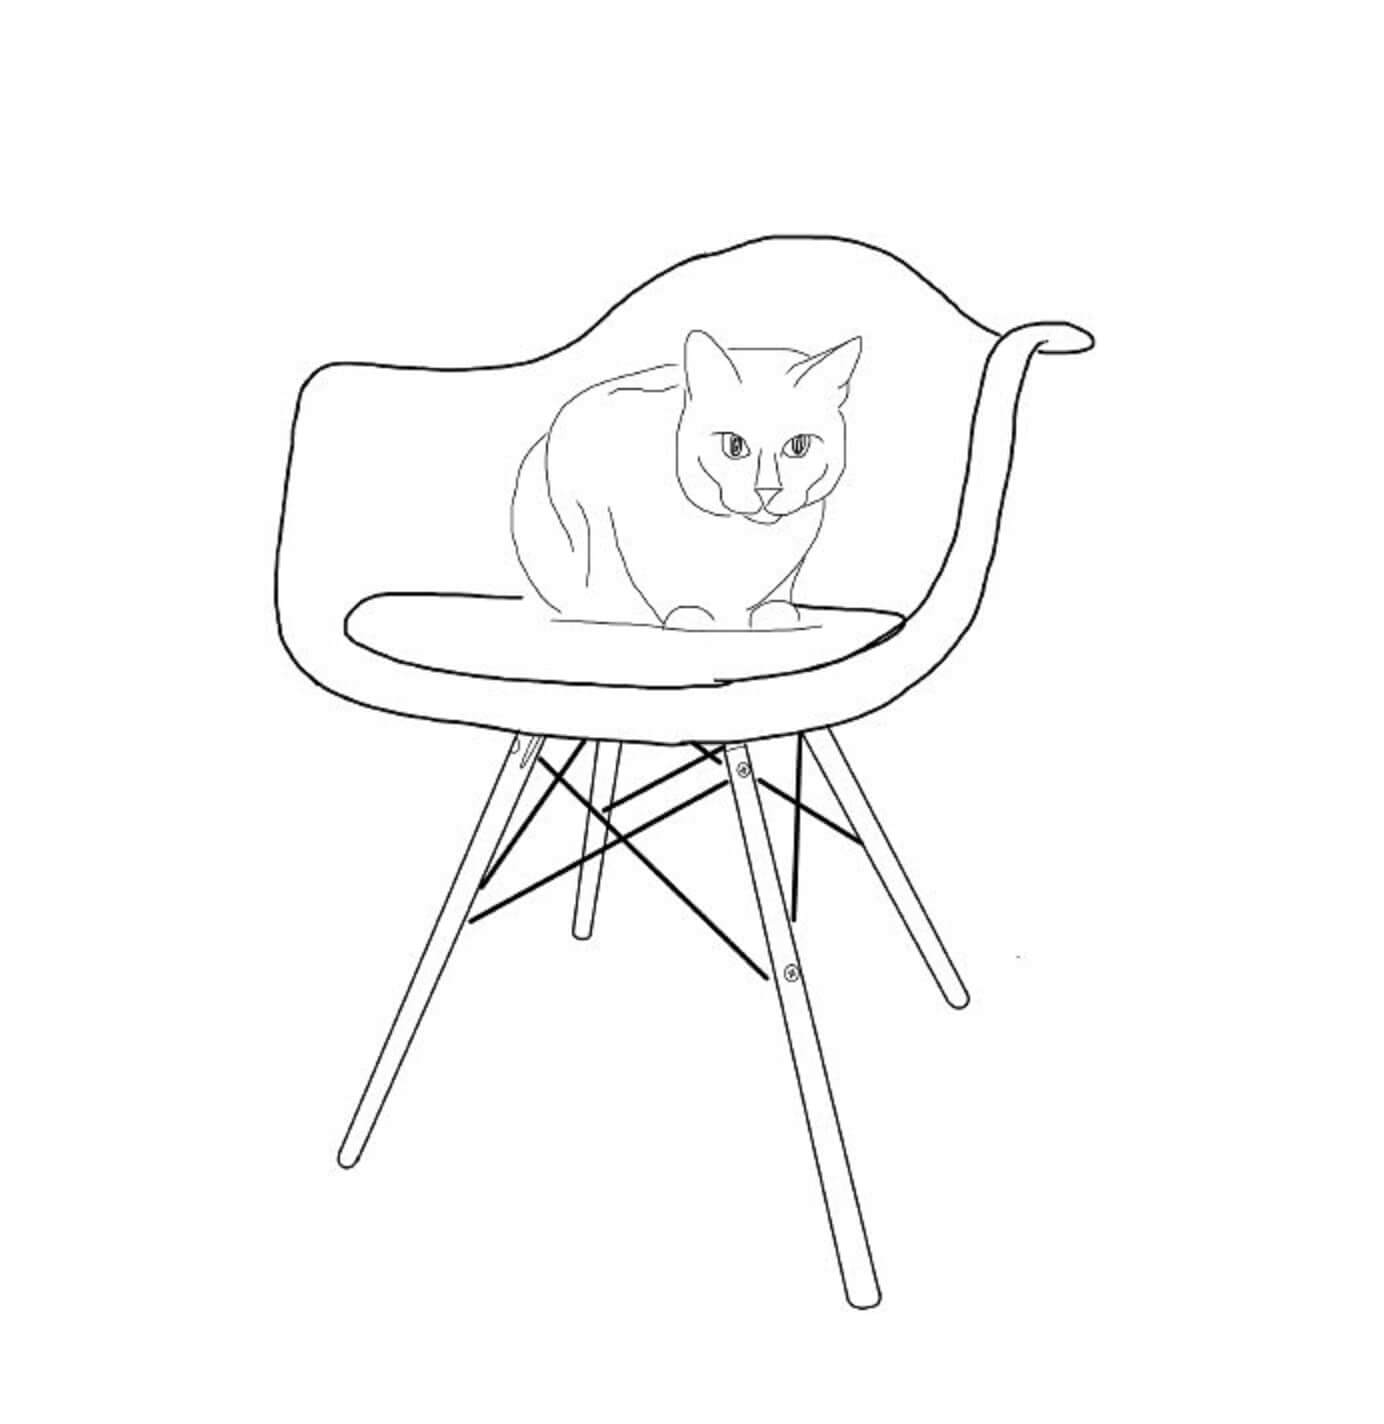 Kissa tuolilla Värityskuva